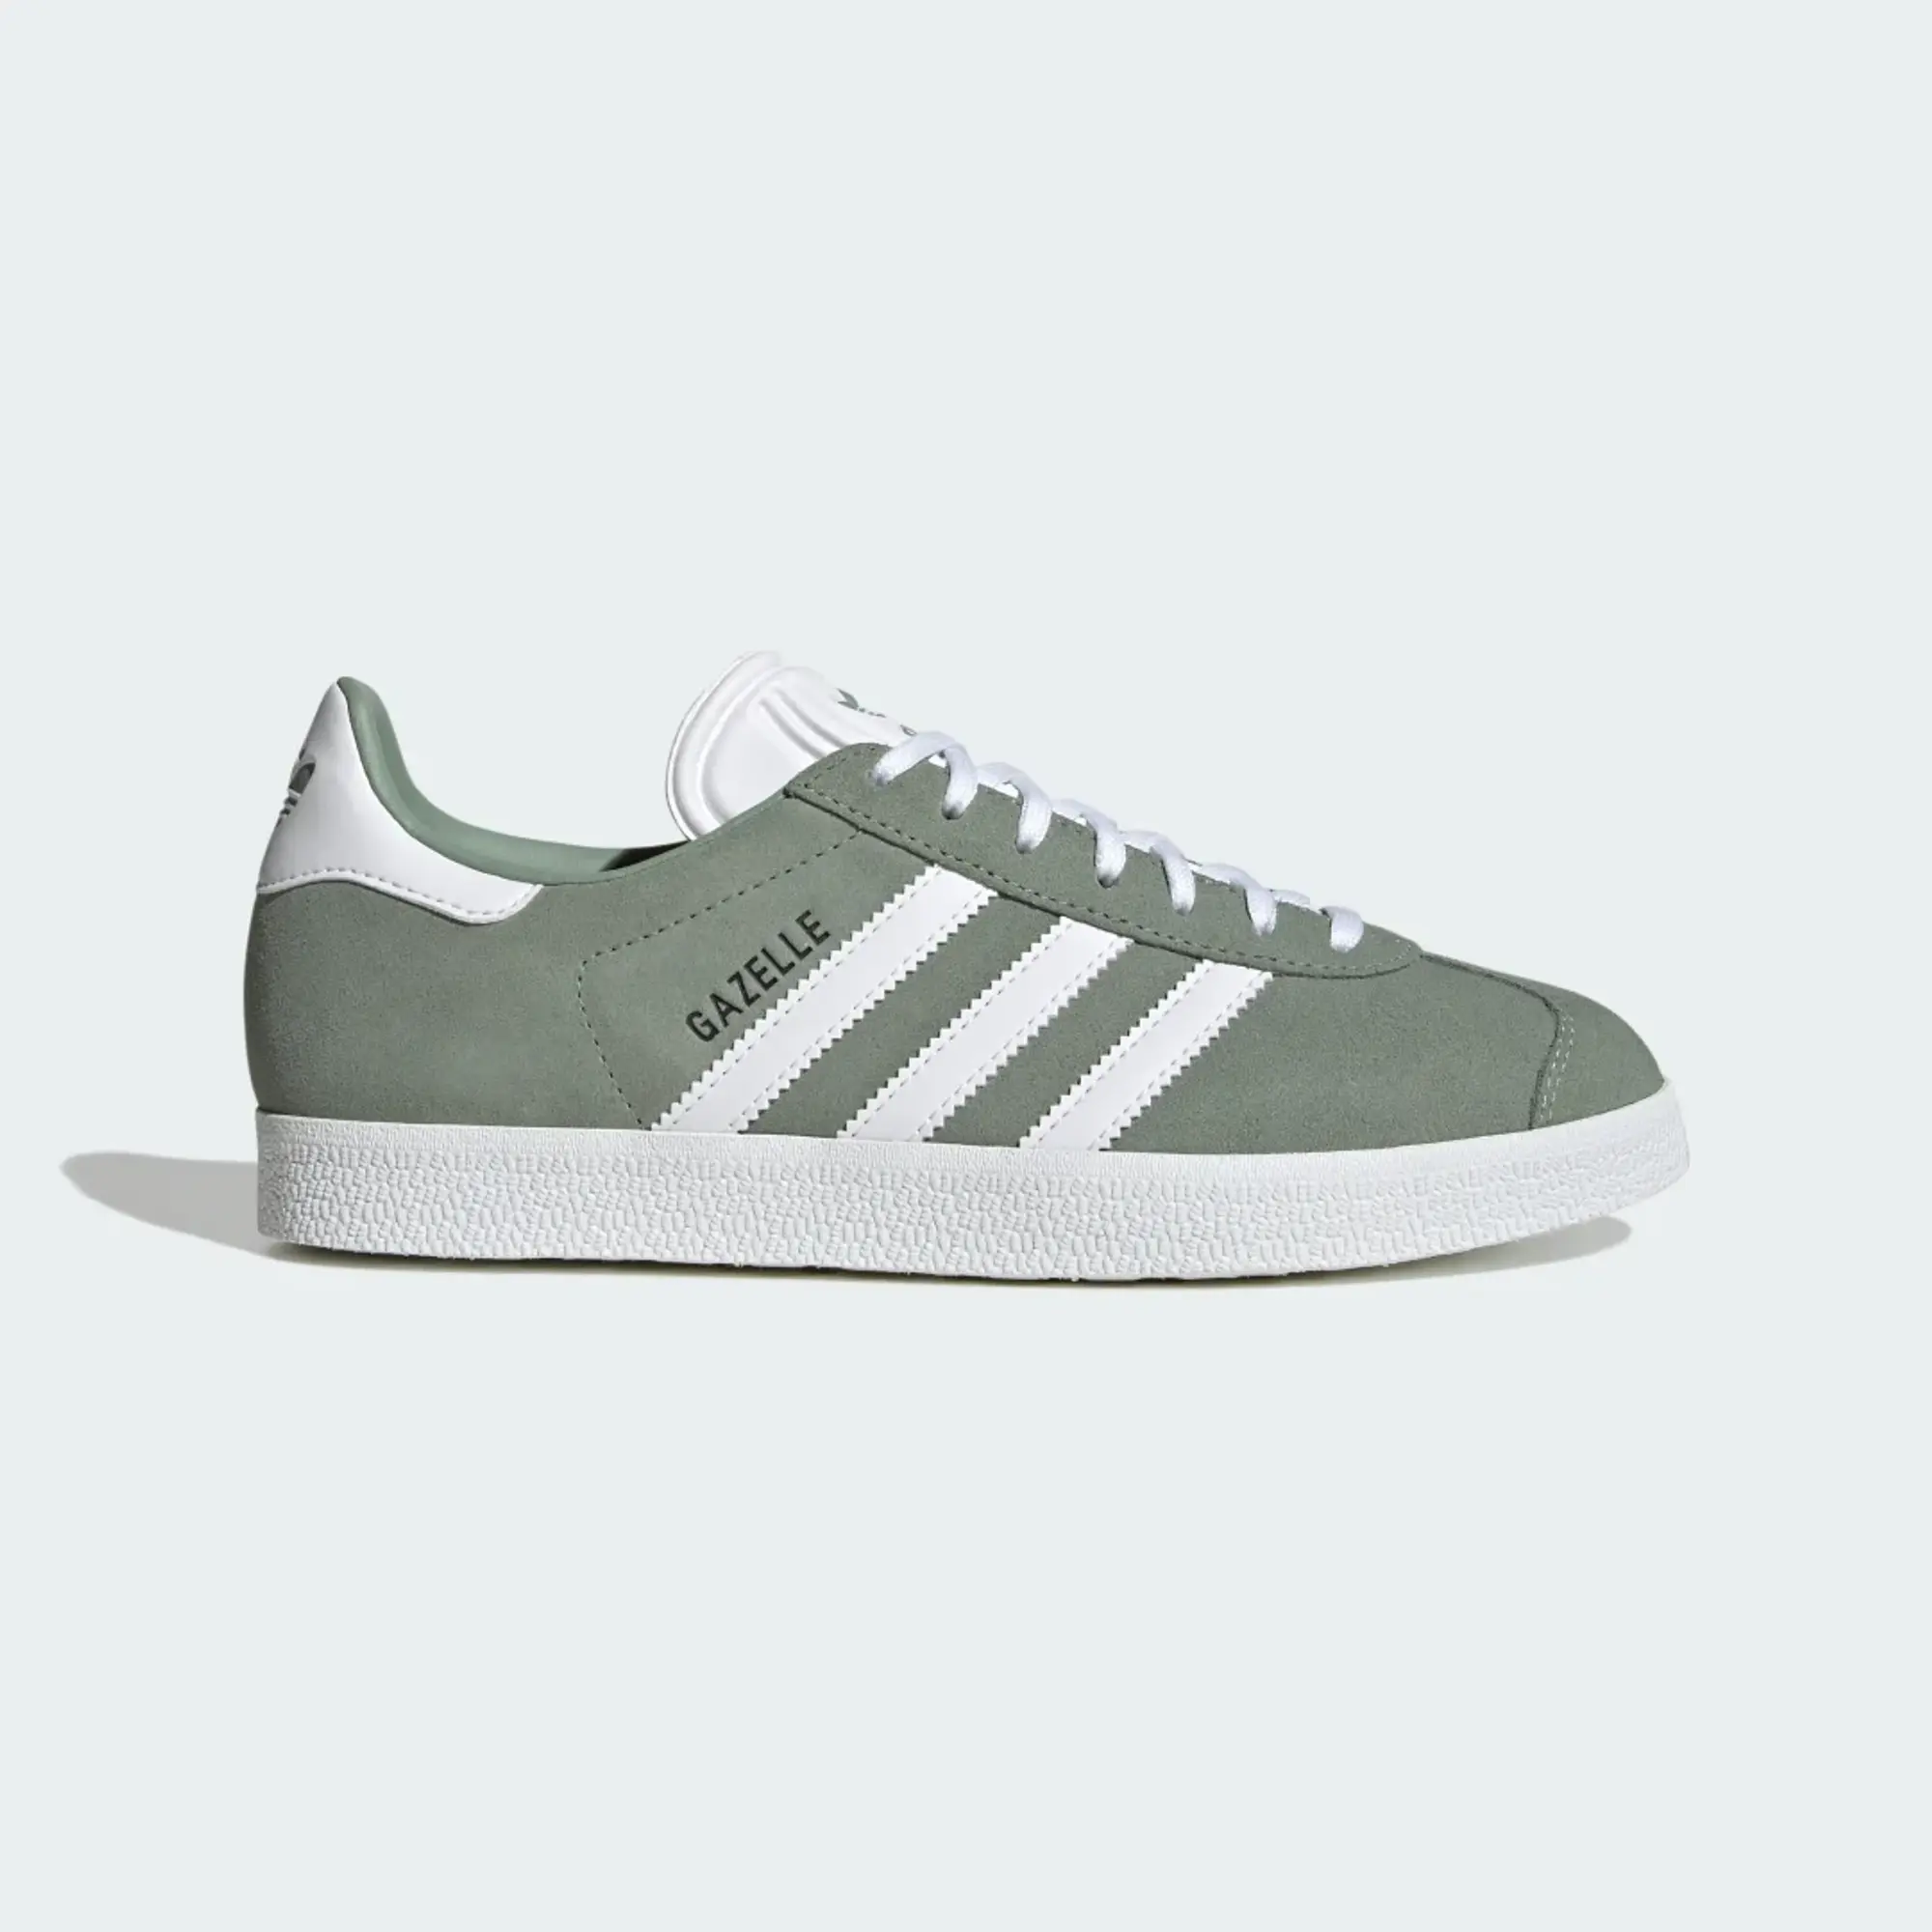 Adidas Originals Gazelle Trainers In Silver Green/White